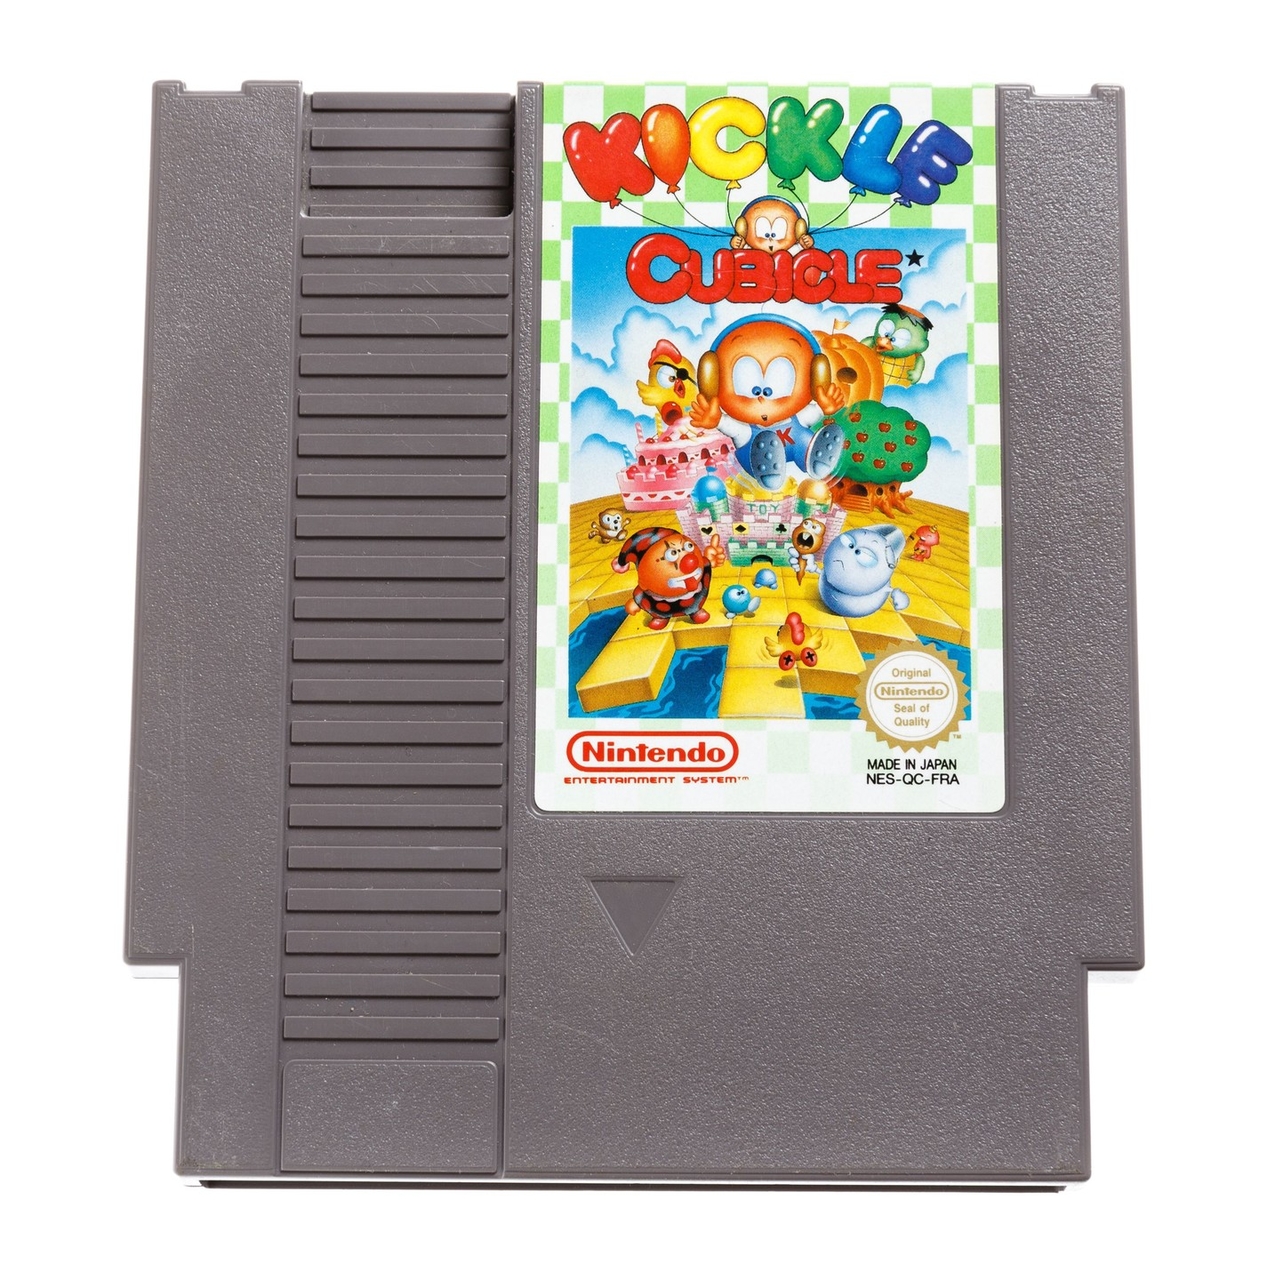 Kickle Cubicle - Nintendo NES Games